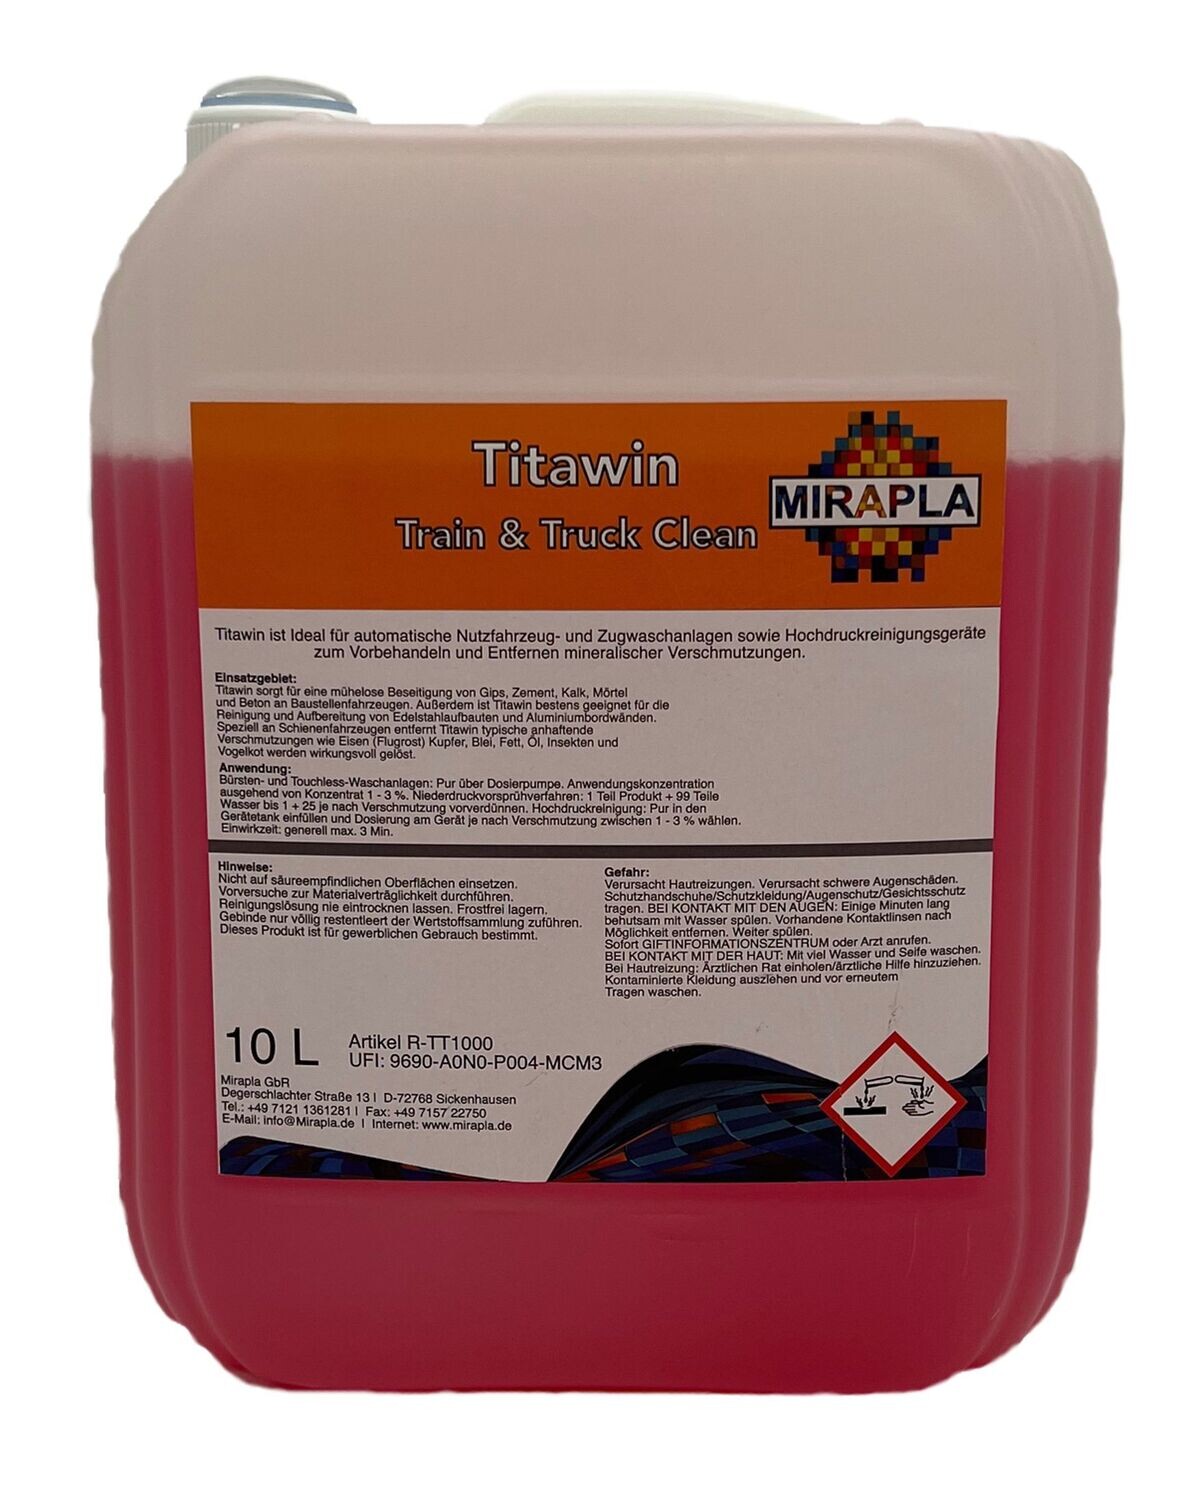 Titawin Train & Truck Clean